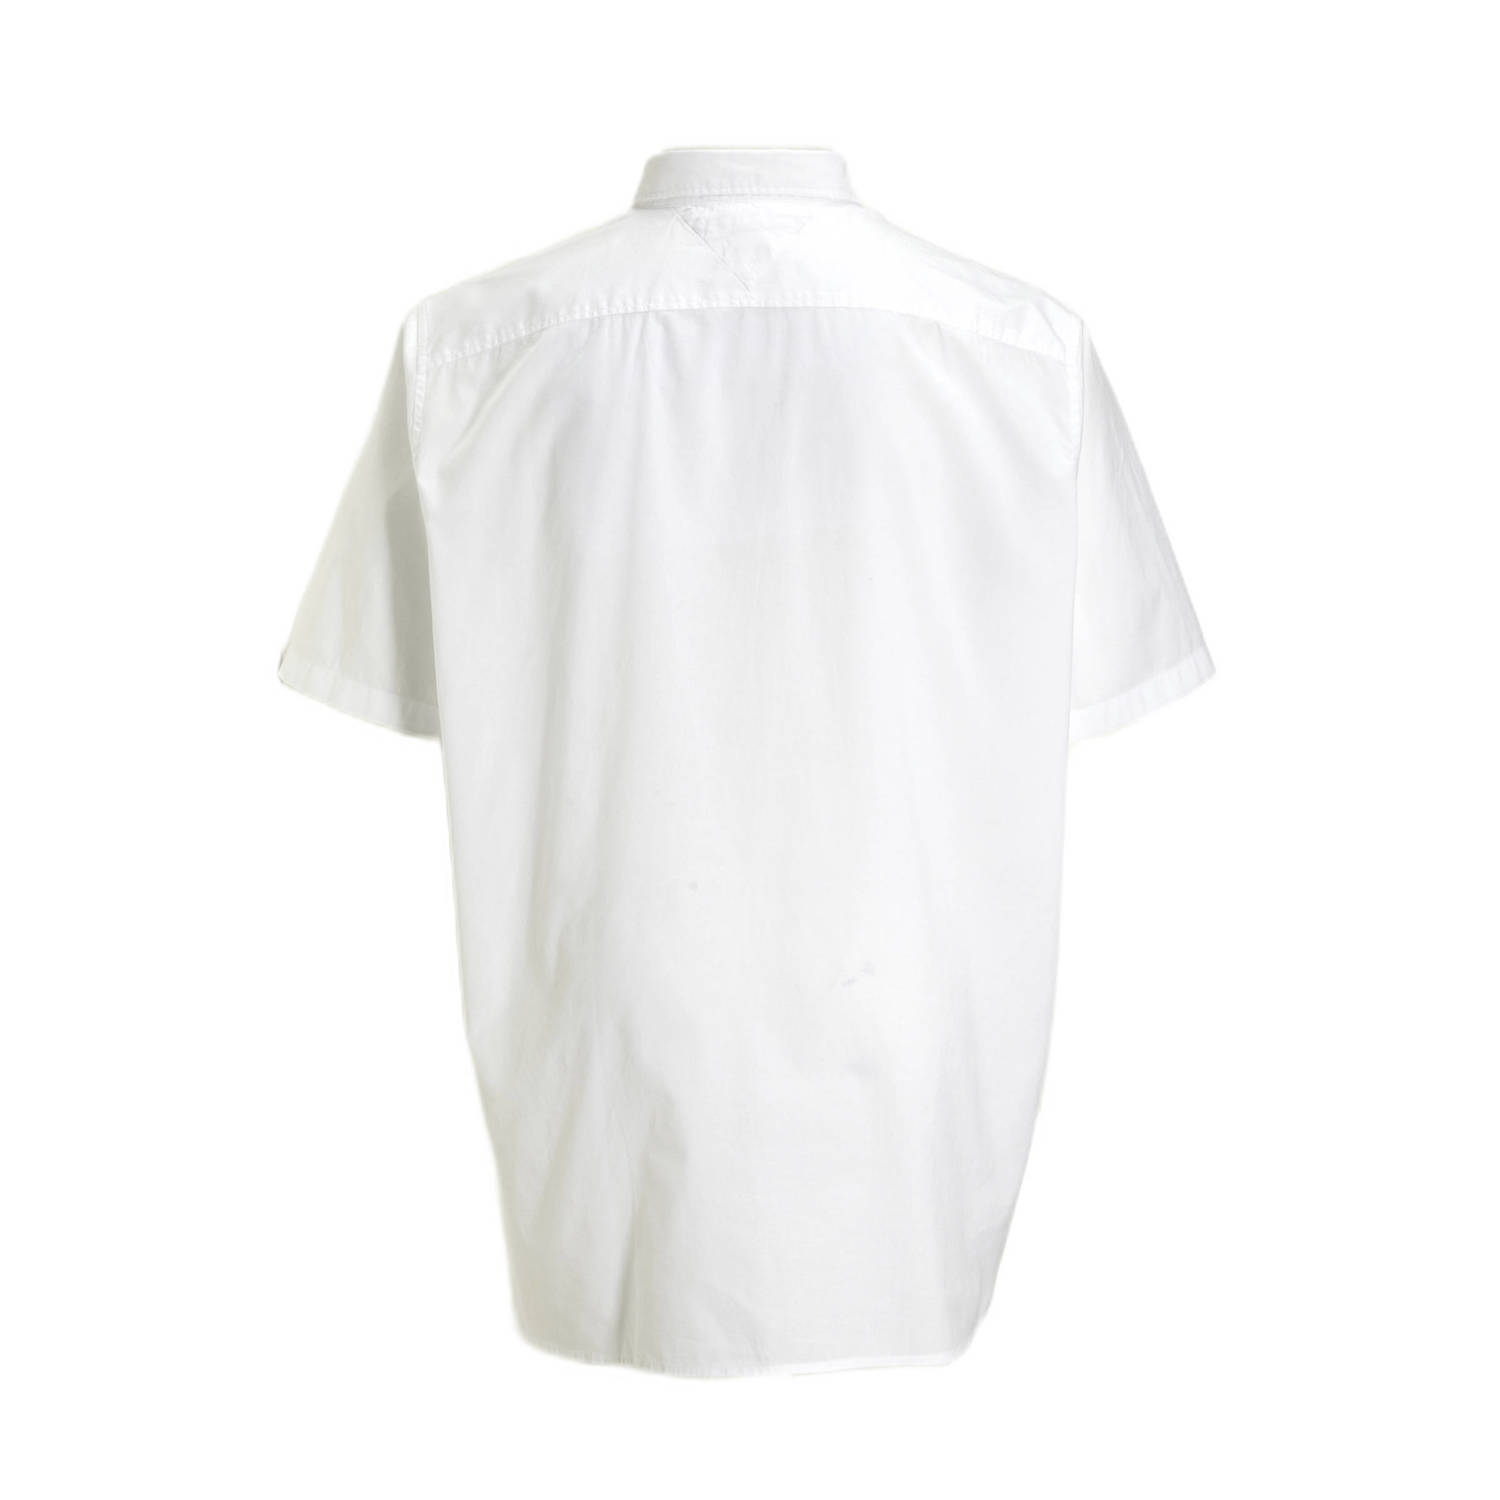 Tommy Hilfiger Big & Tall regular fit overhemd Plus Size met logo white